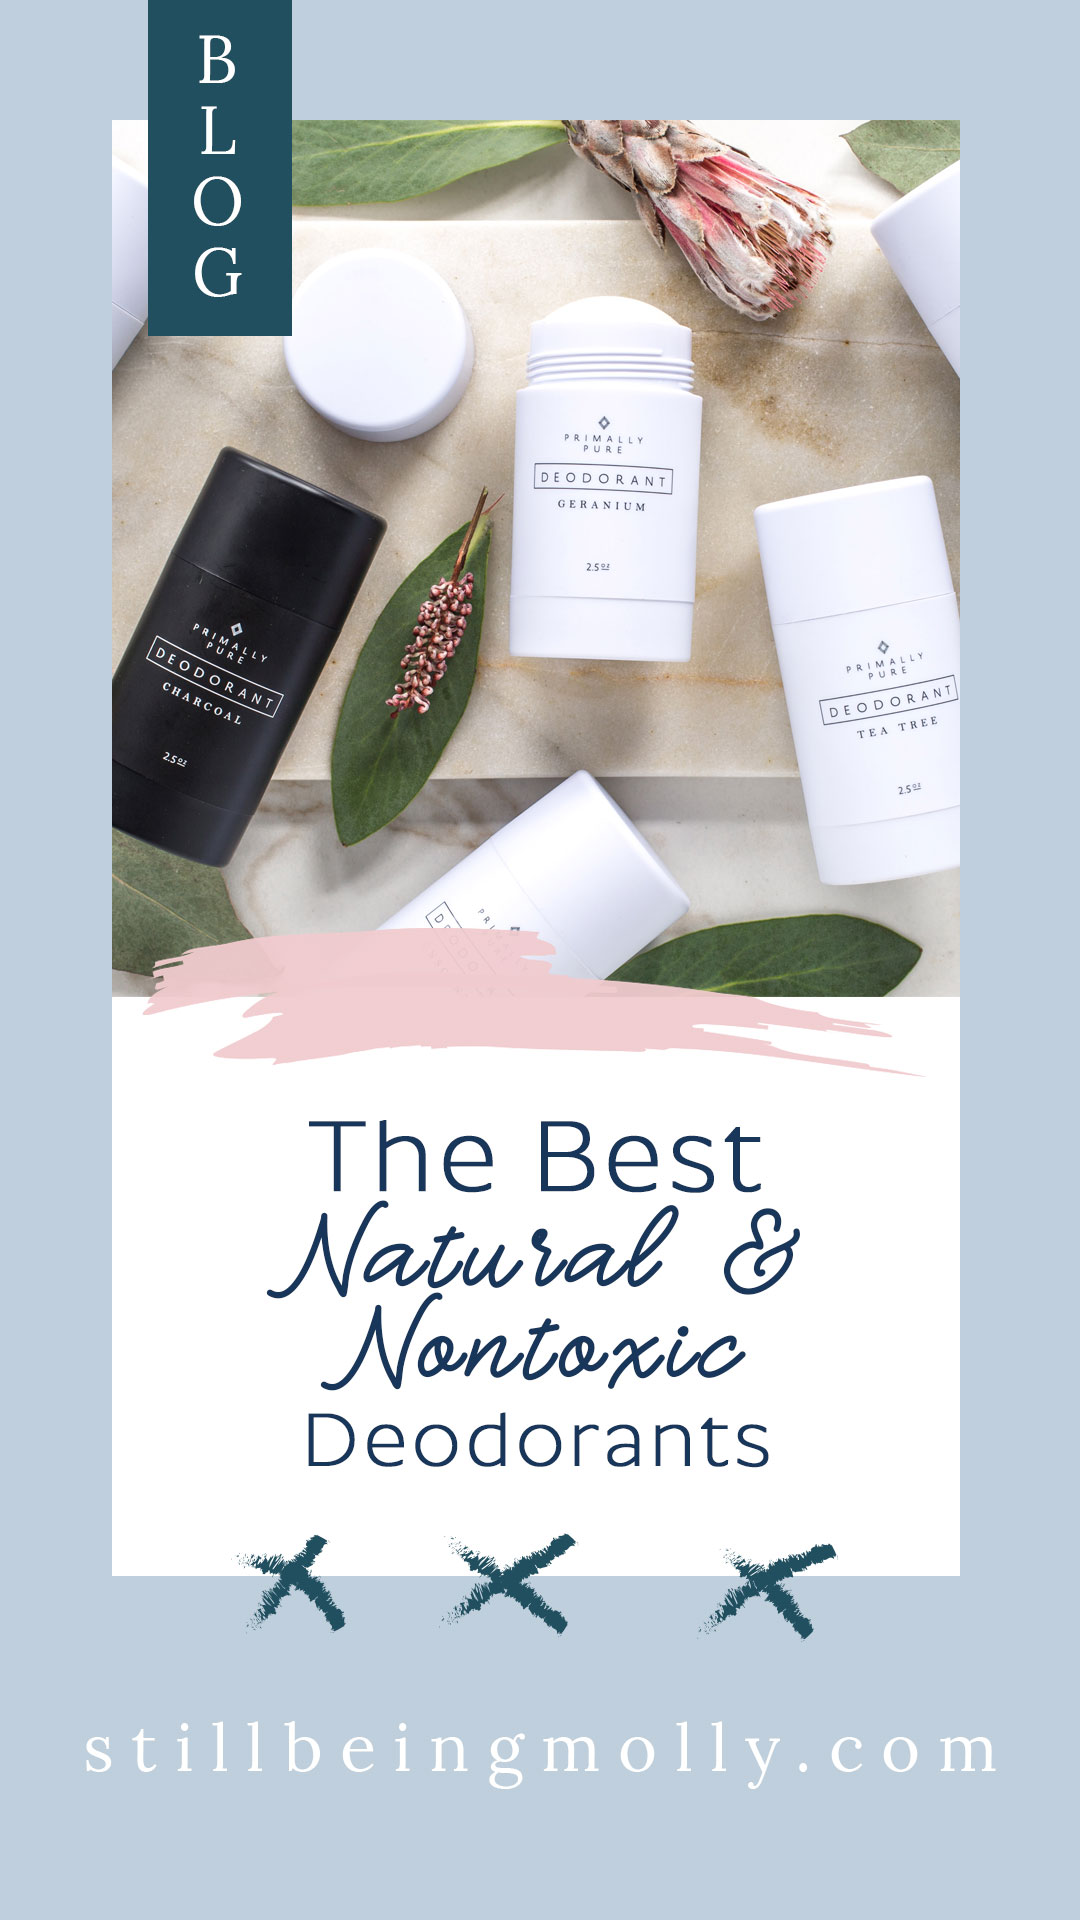 The Best Natural & Nontoxic Deodorants